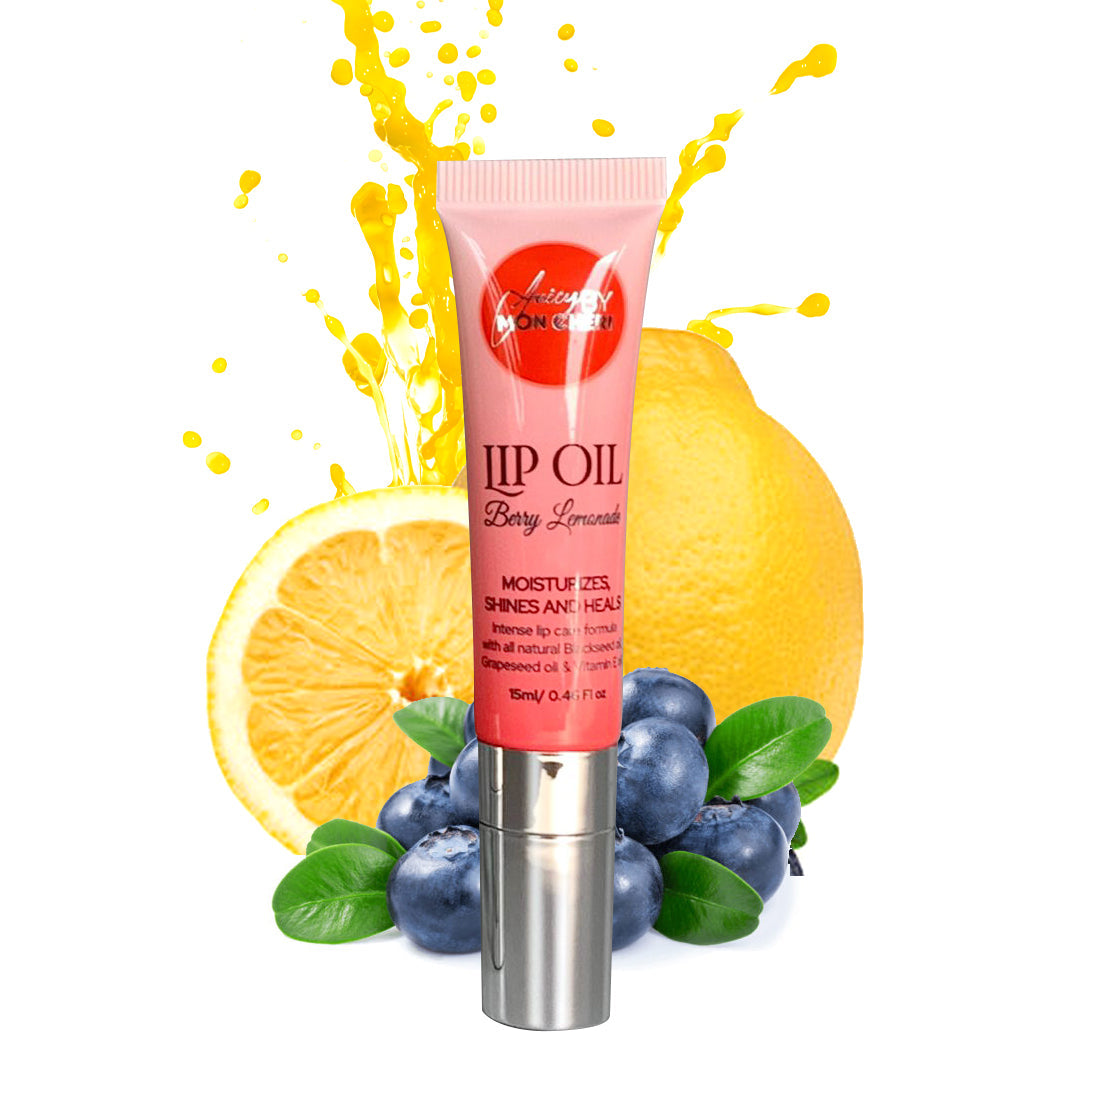 Juicy By Mon Cheri Lip Oil - Moisturize Shine and Healed Lips!